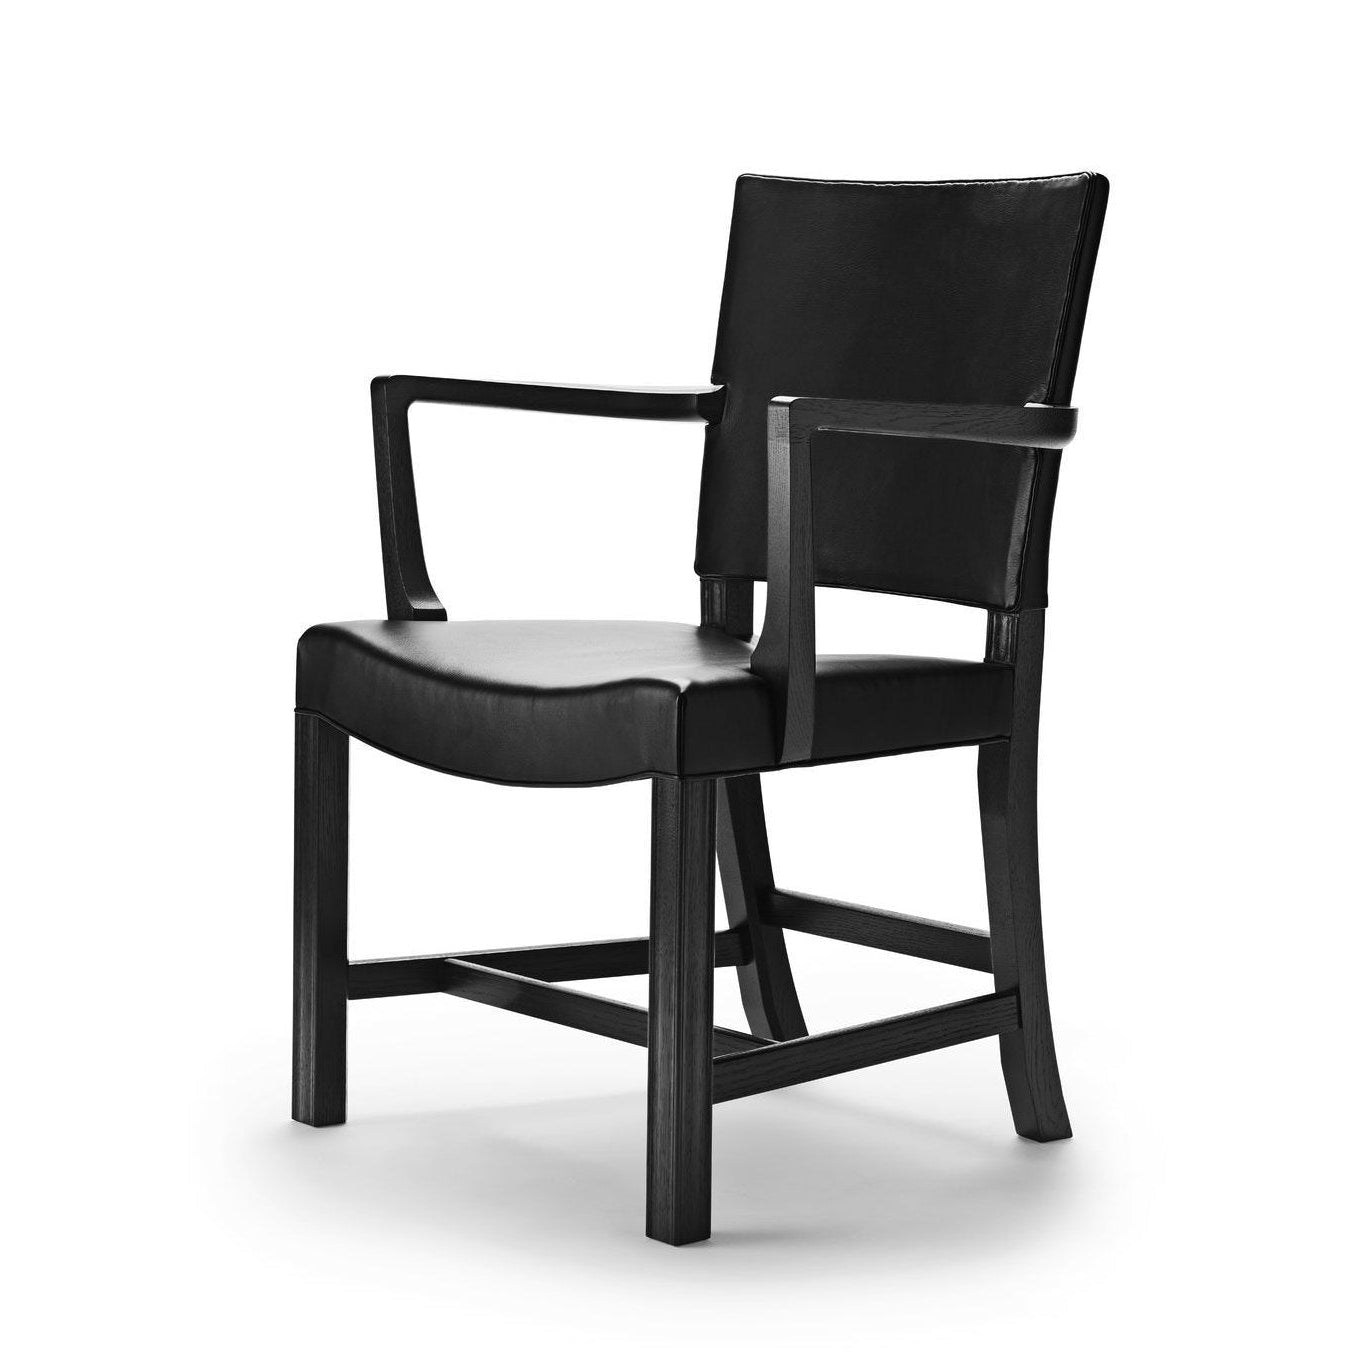 Carl Hansen KK37581 Grote rode fauteuil, zwart eiken/zwart leer